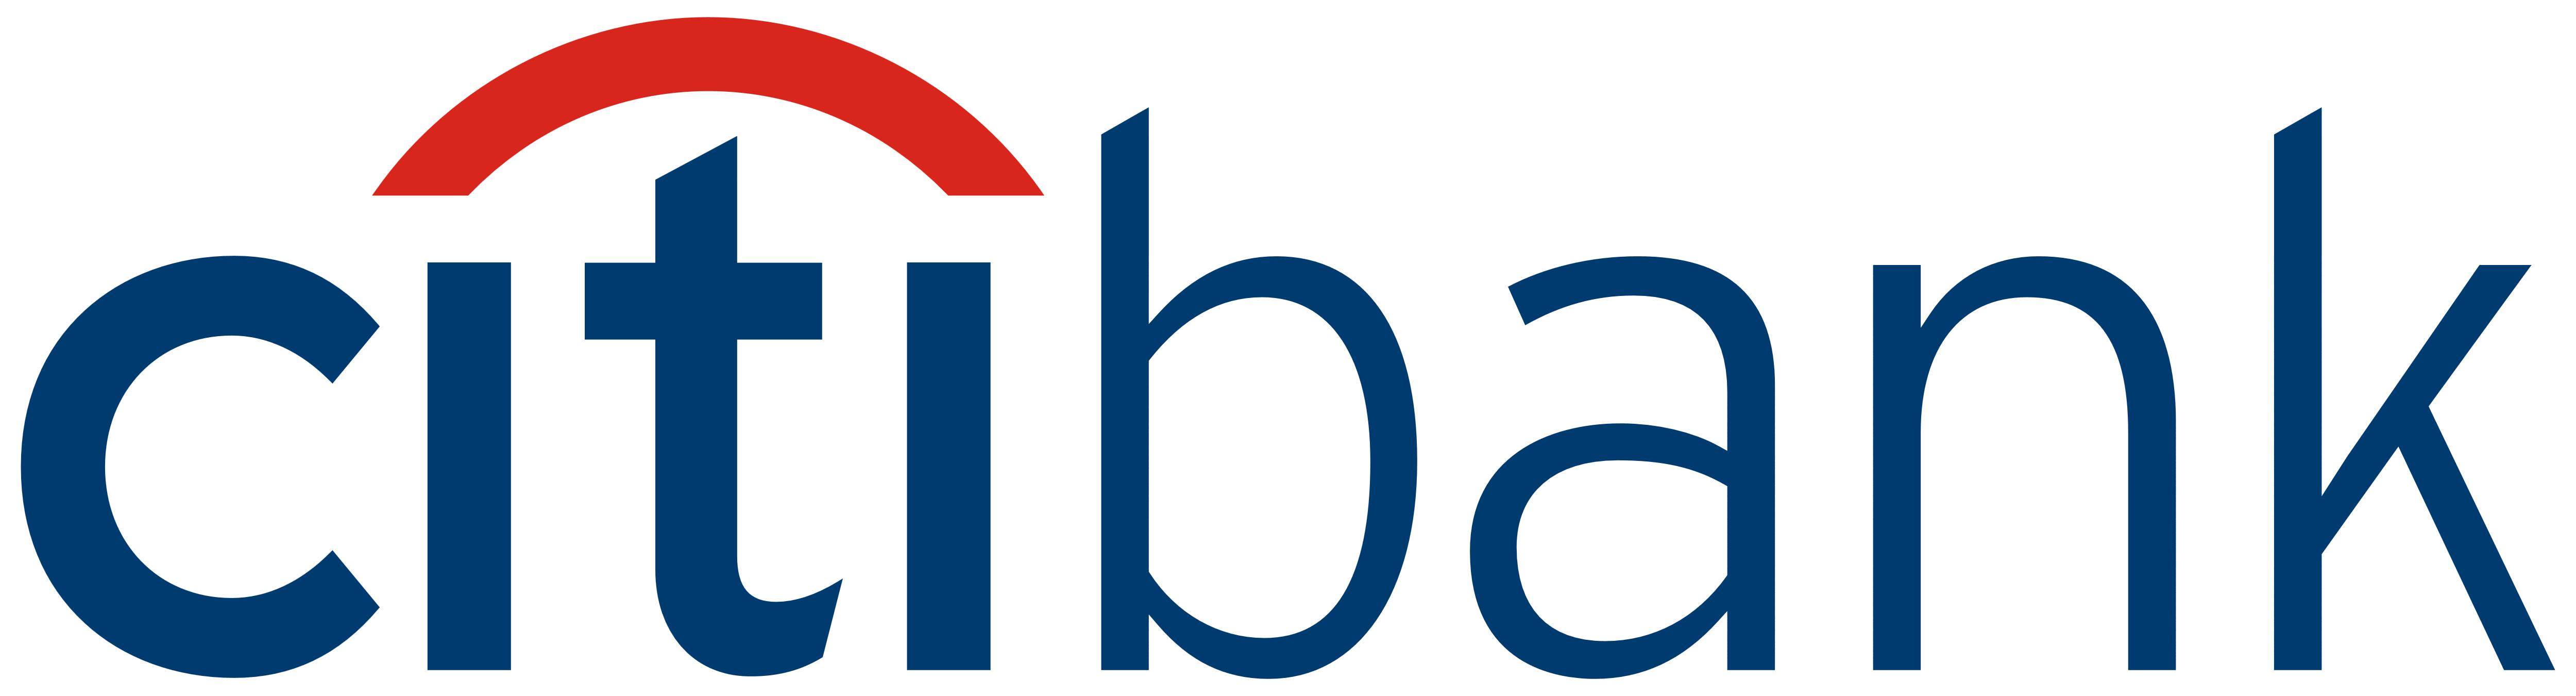 logo for citibank